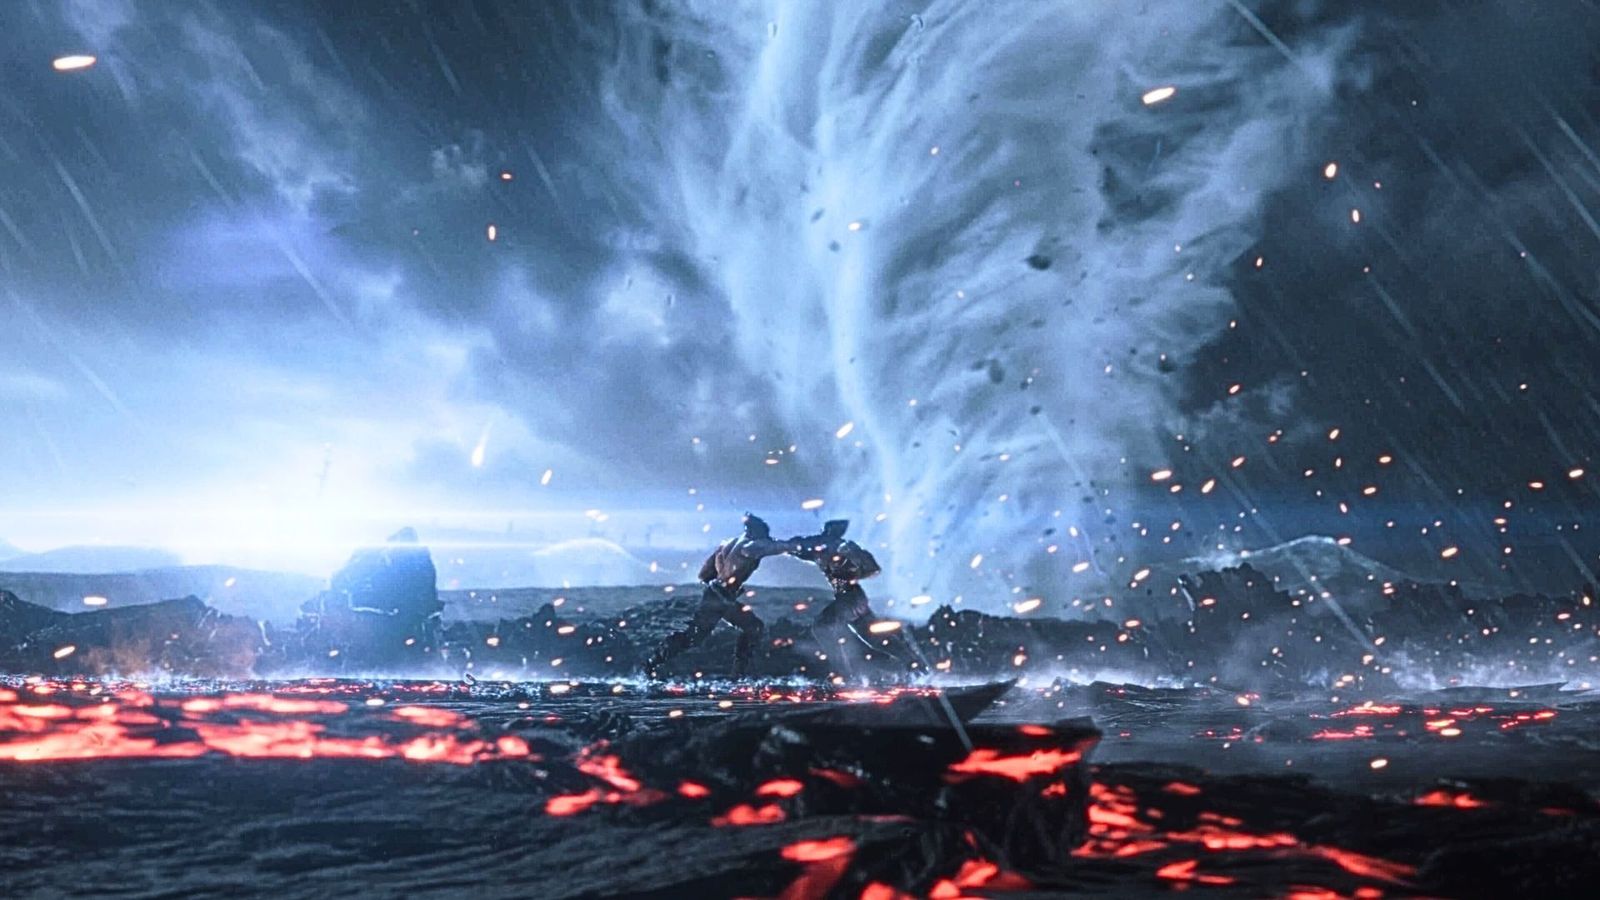 Jin Kazama and Kazuya Mishima engaged in a battle during a storm